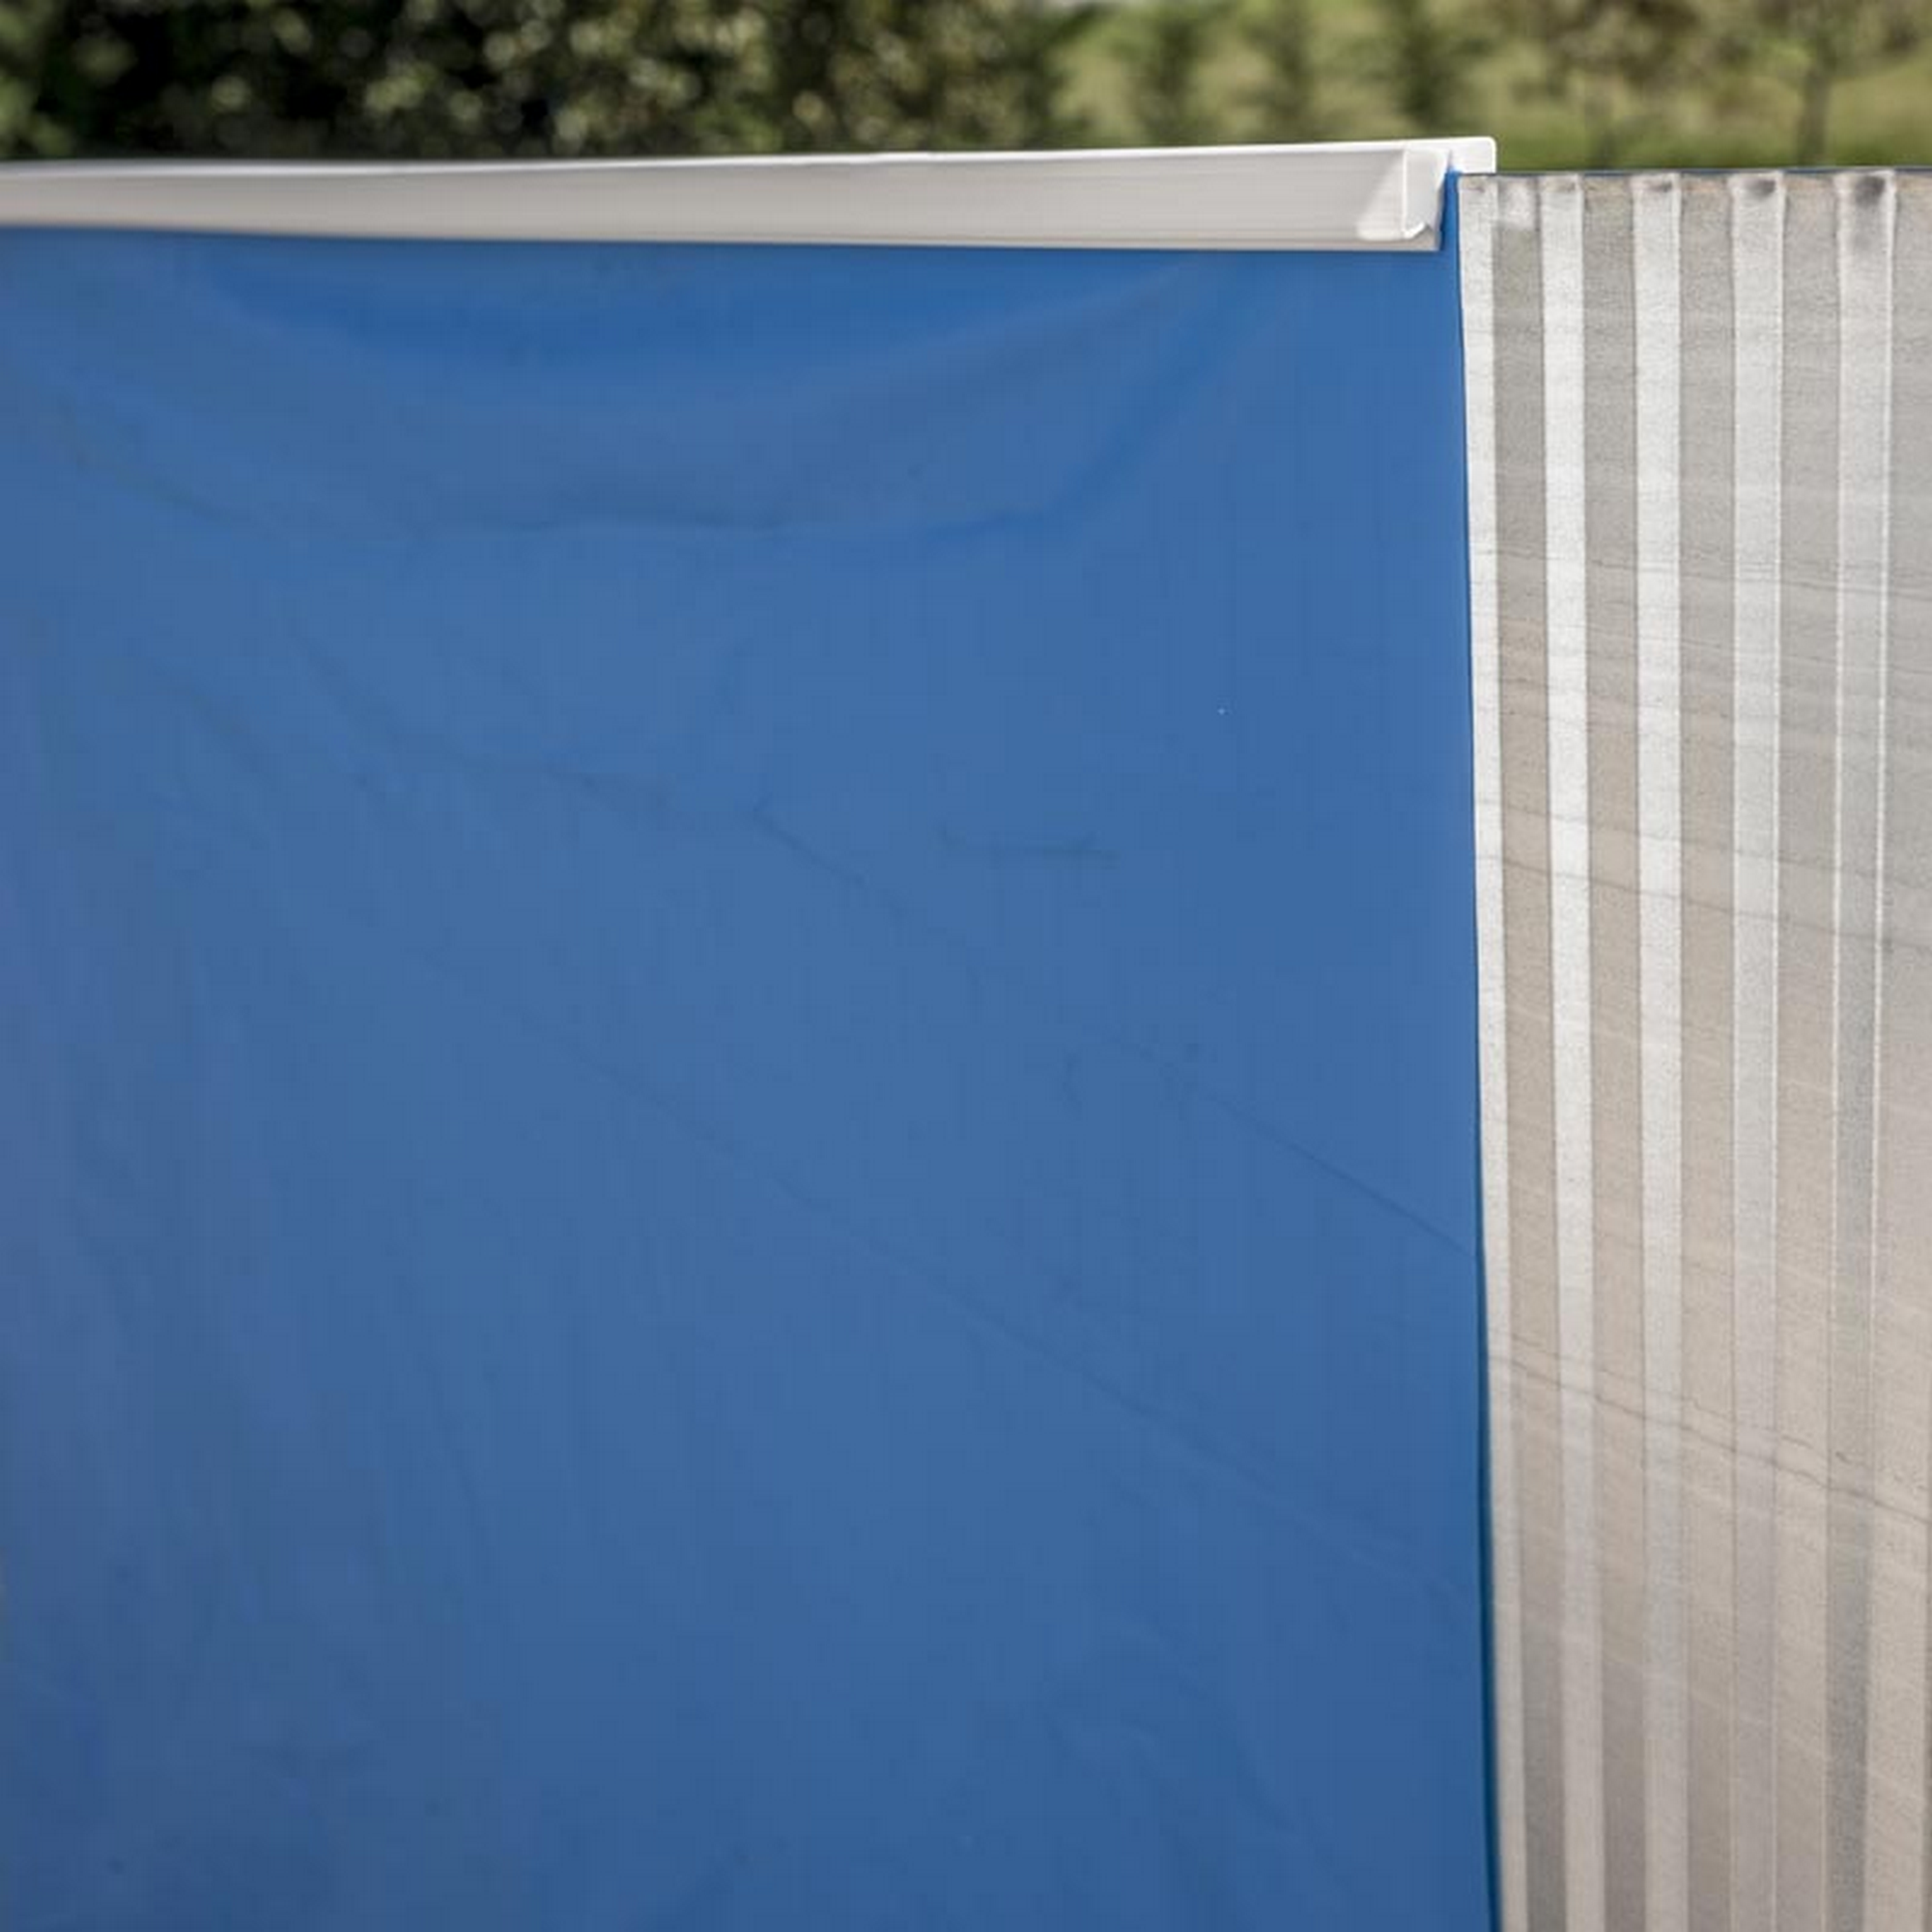 Einbaupool-Set 'Sumatra' blau/weiß oval 600 x 320 x 120 cm + product picture